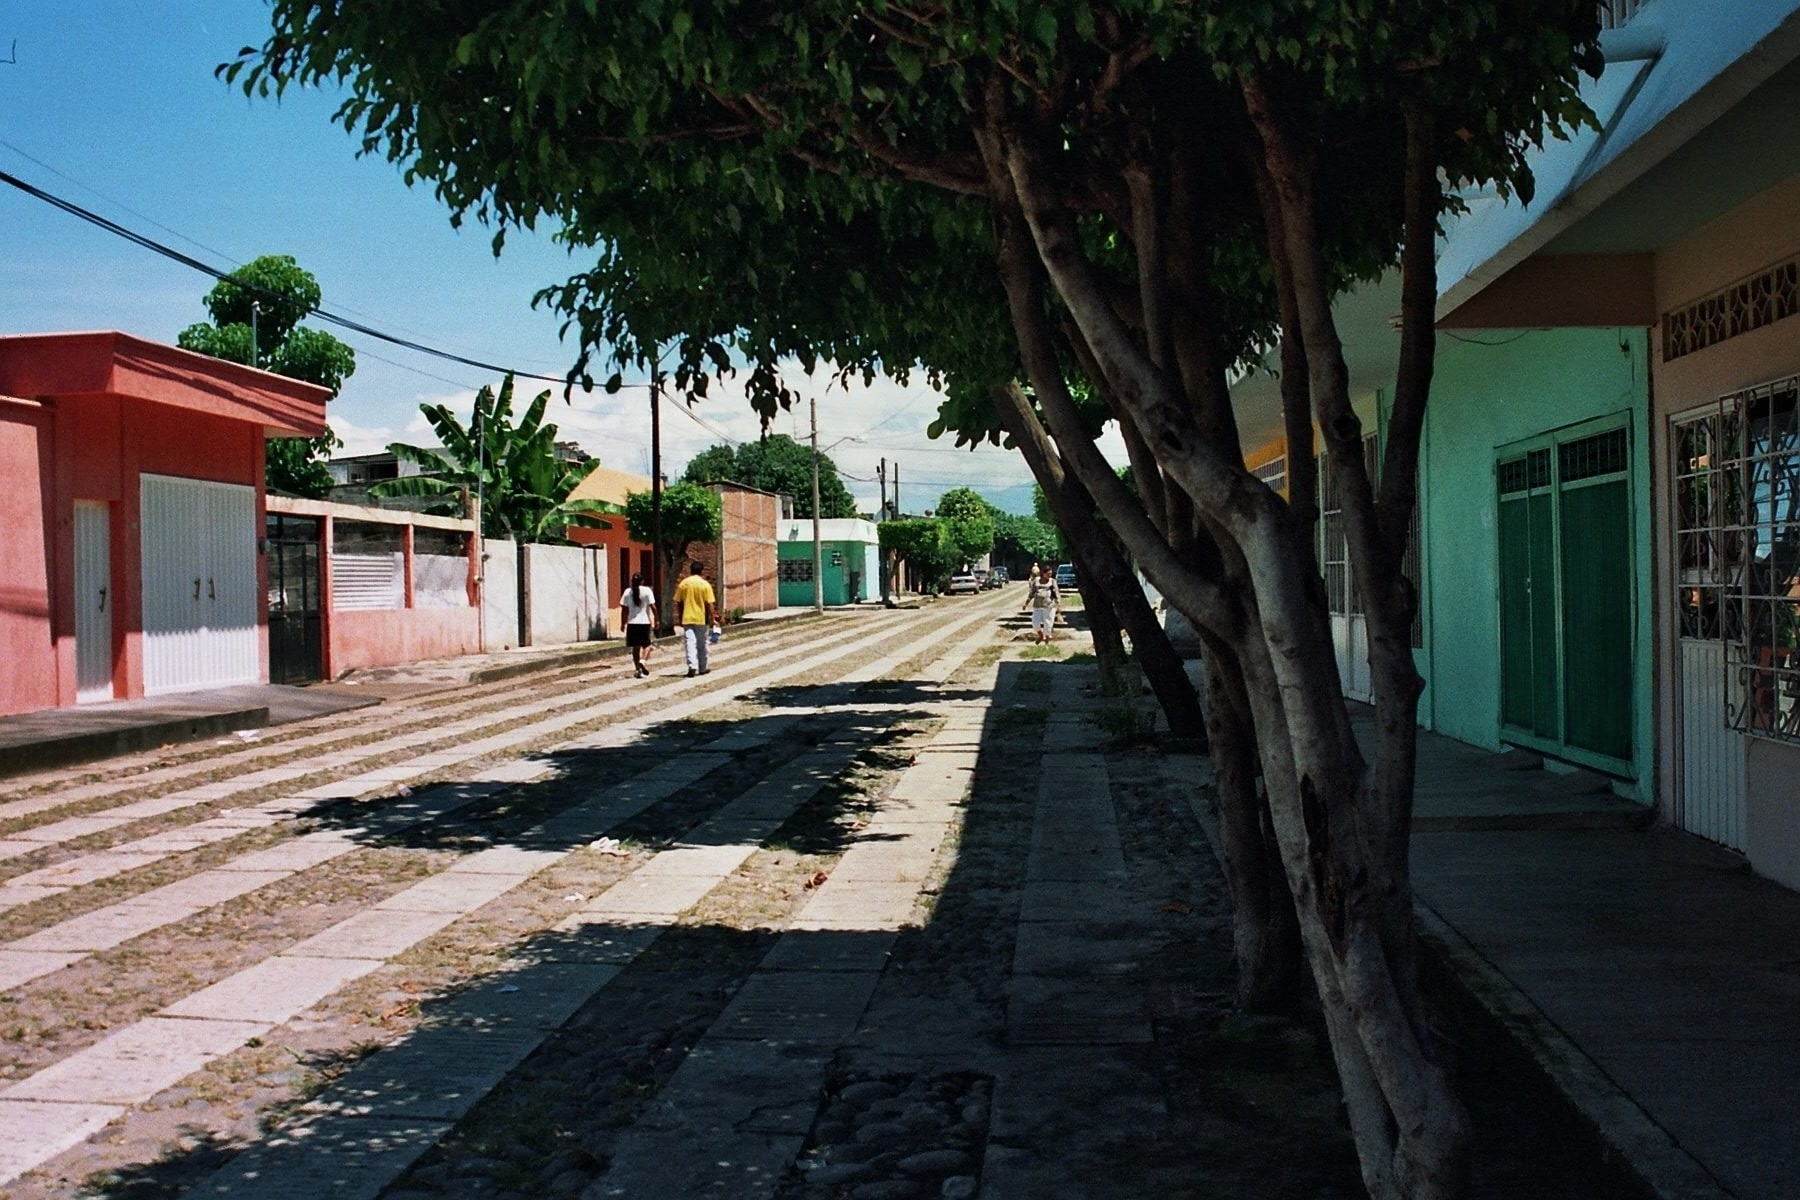 Tapachula, Mexico